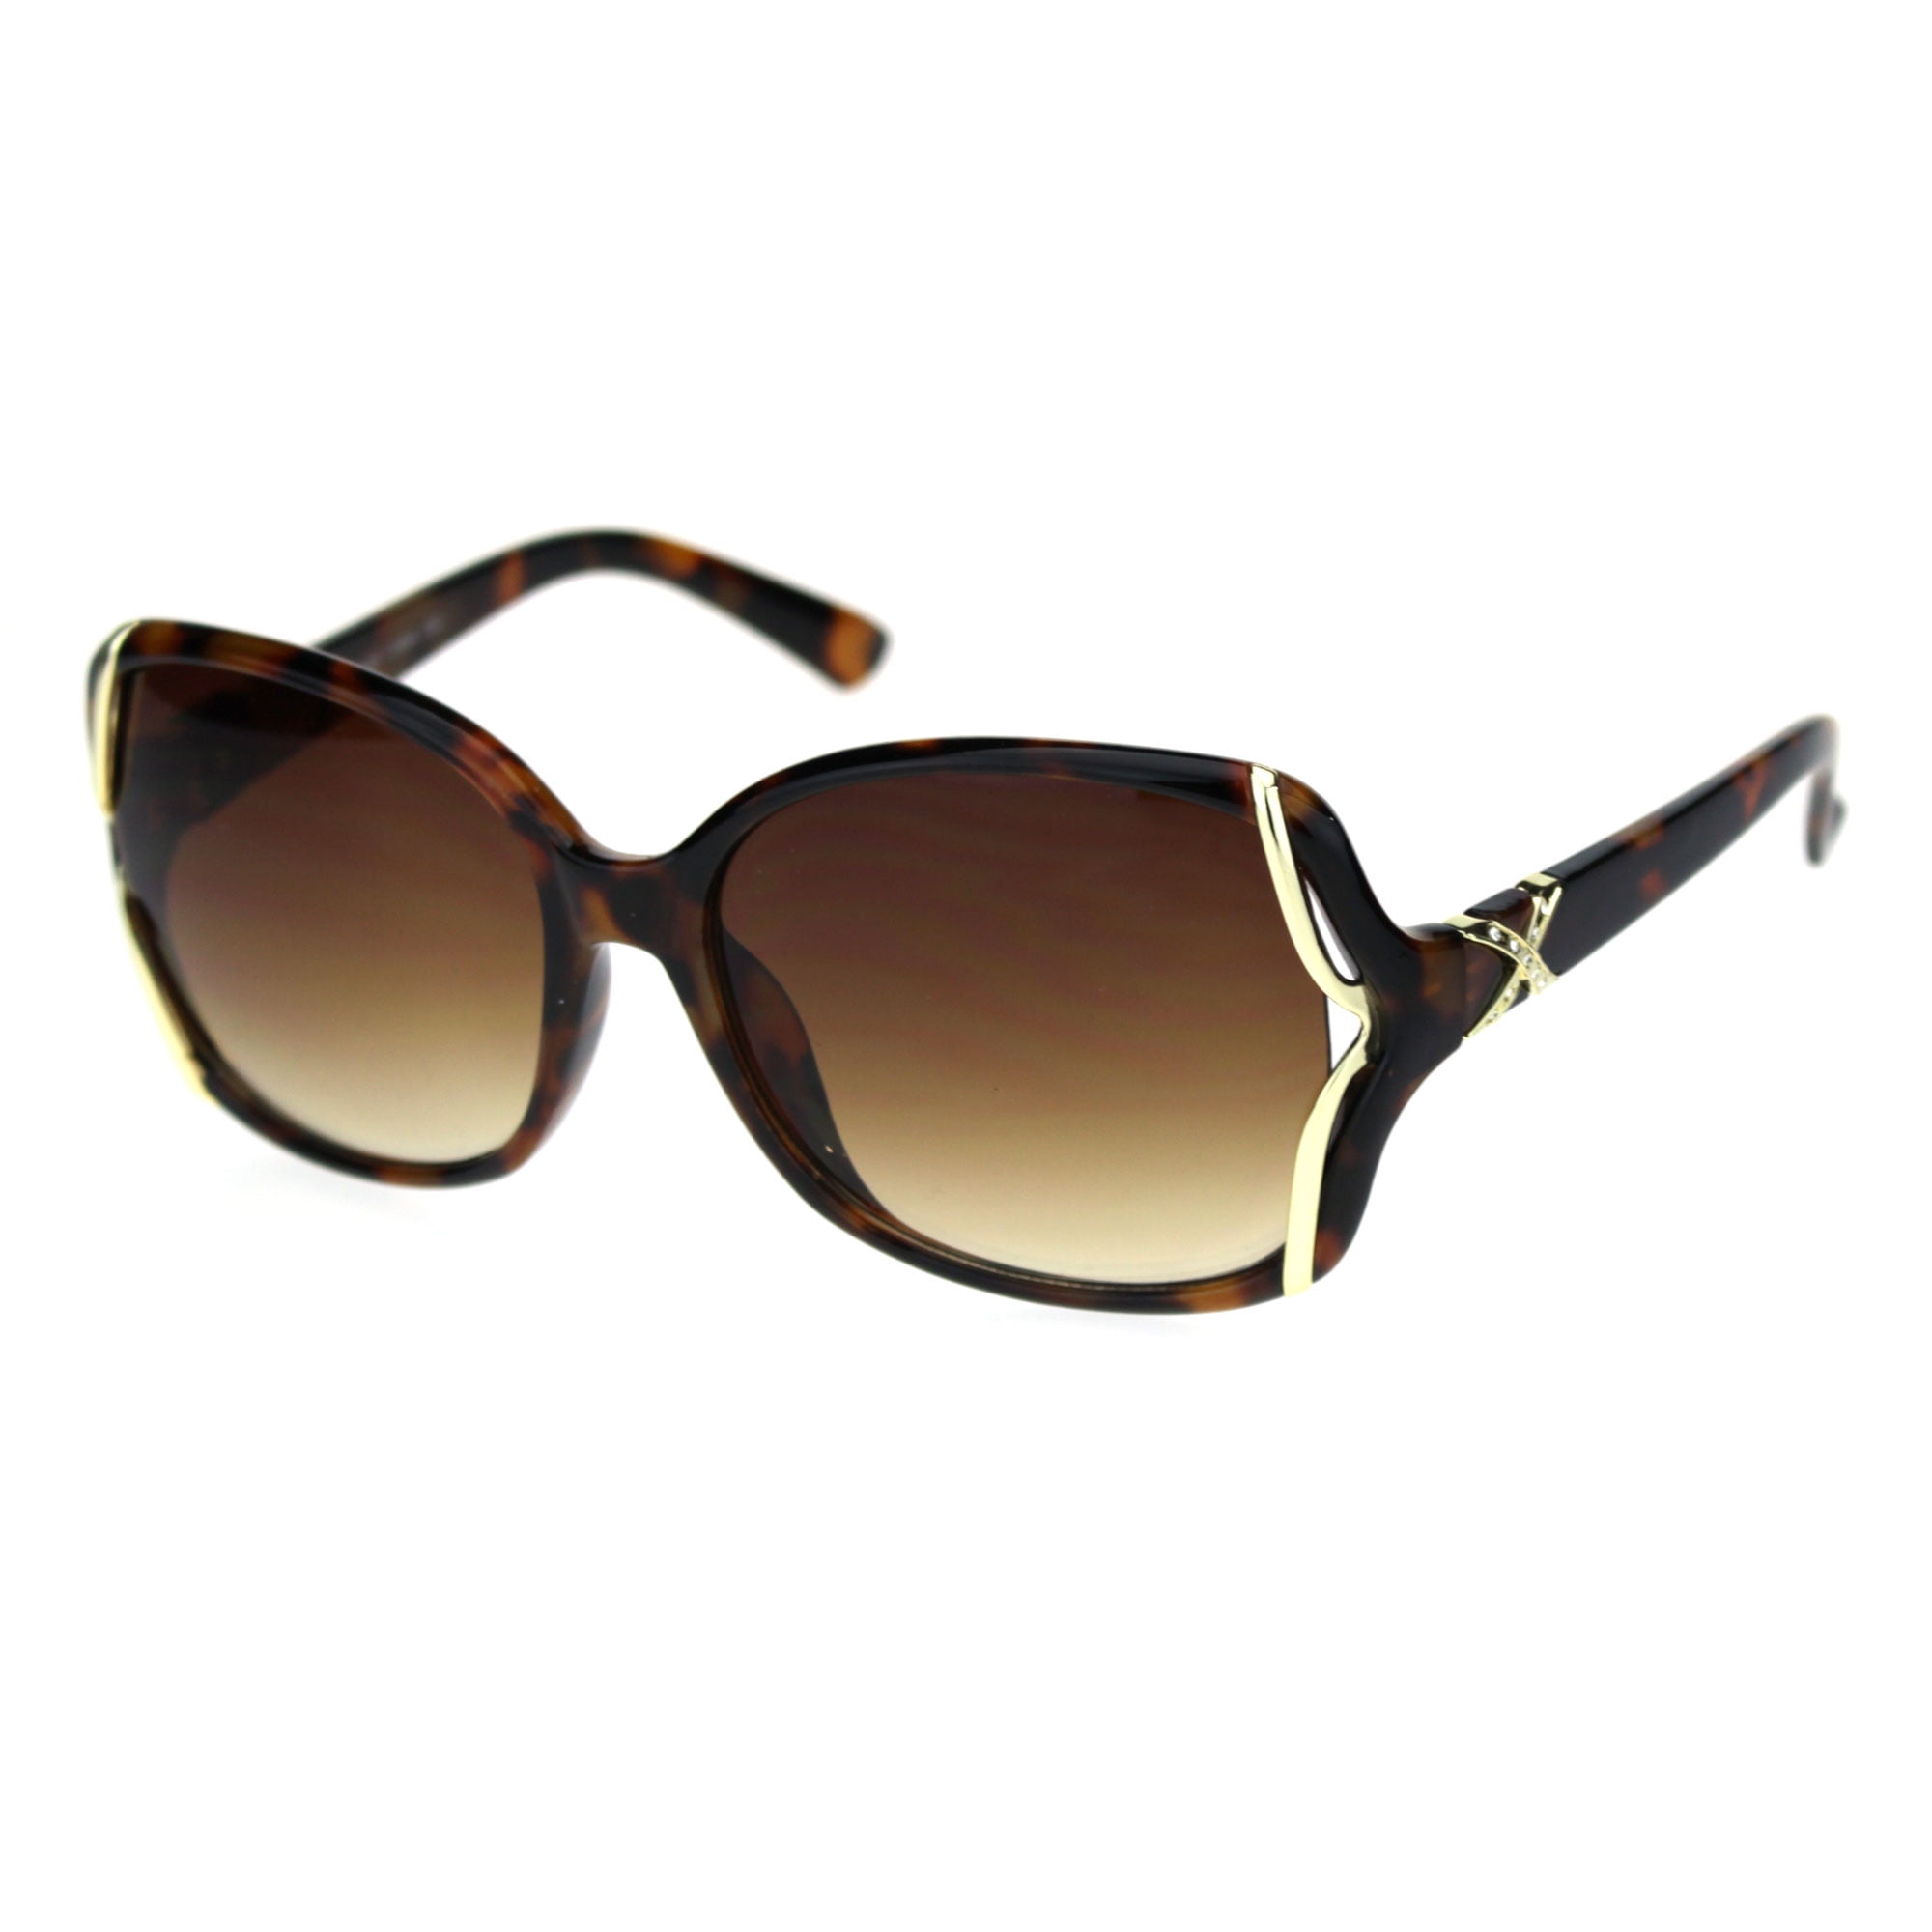 Butterfly Oversized Ladies Sunglasses Retro Nude Tortoiseshell Black 100% UV 